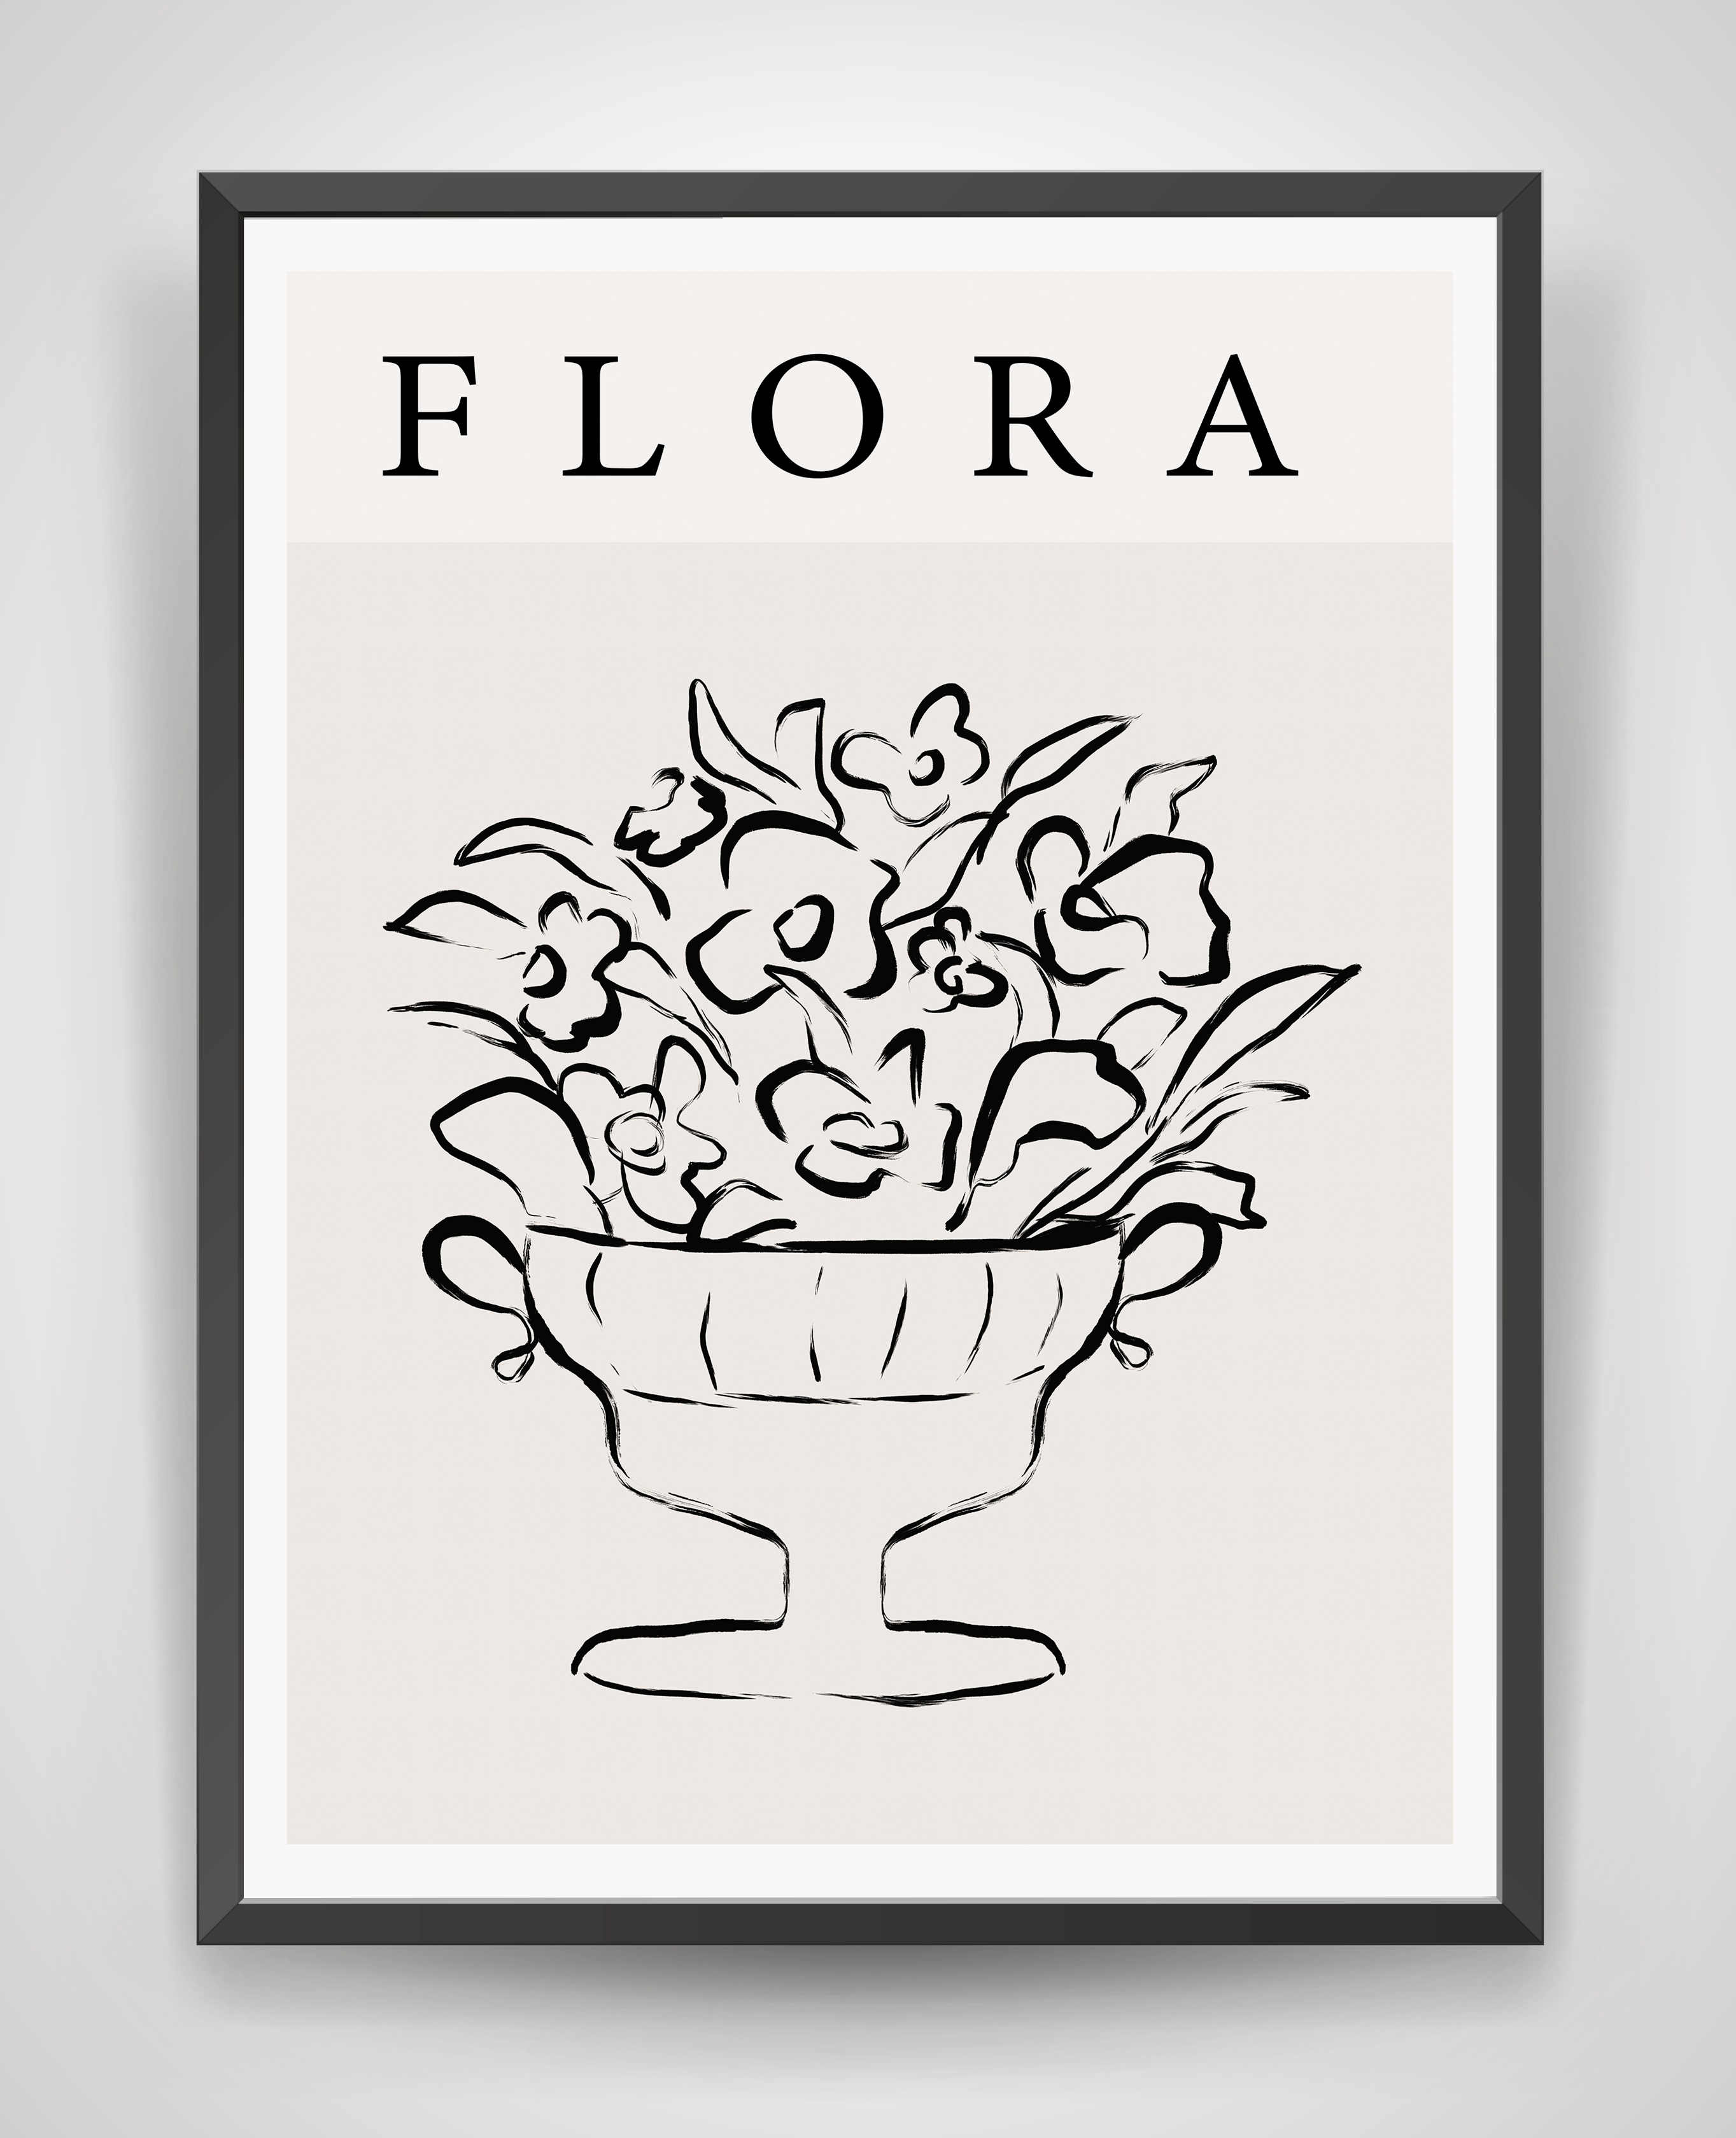 Flora affisch